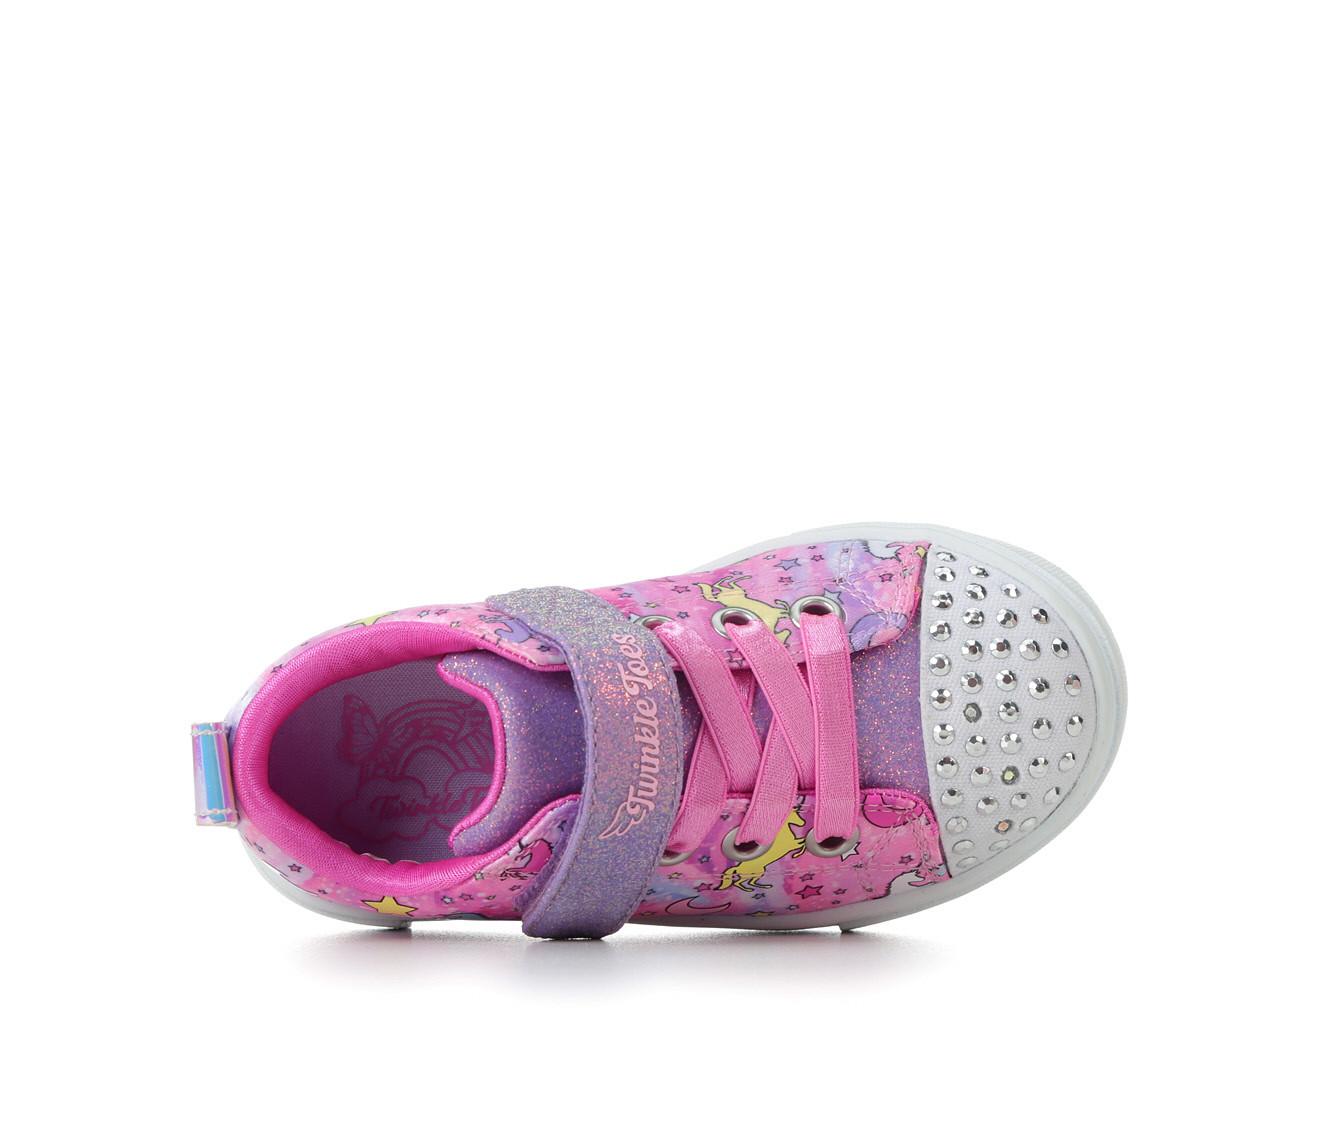 Girls' Skechers Toddler Twinkle Sparks-Unicorn Sneakers